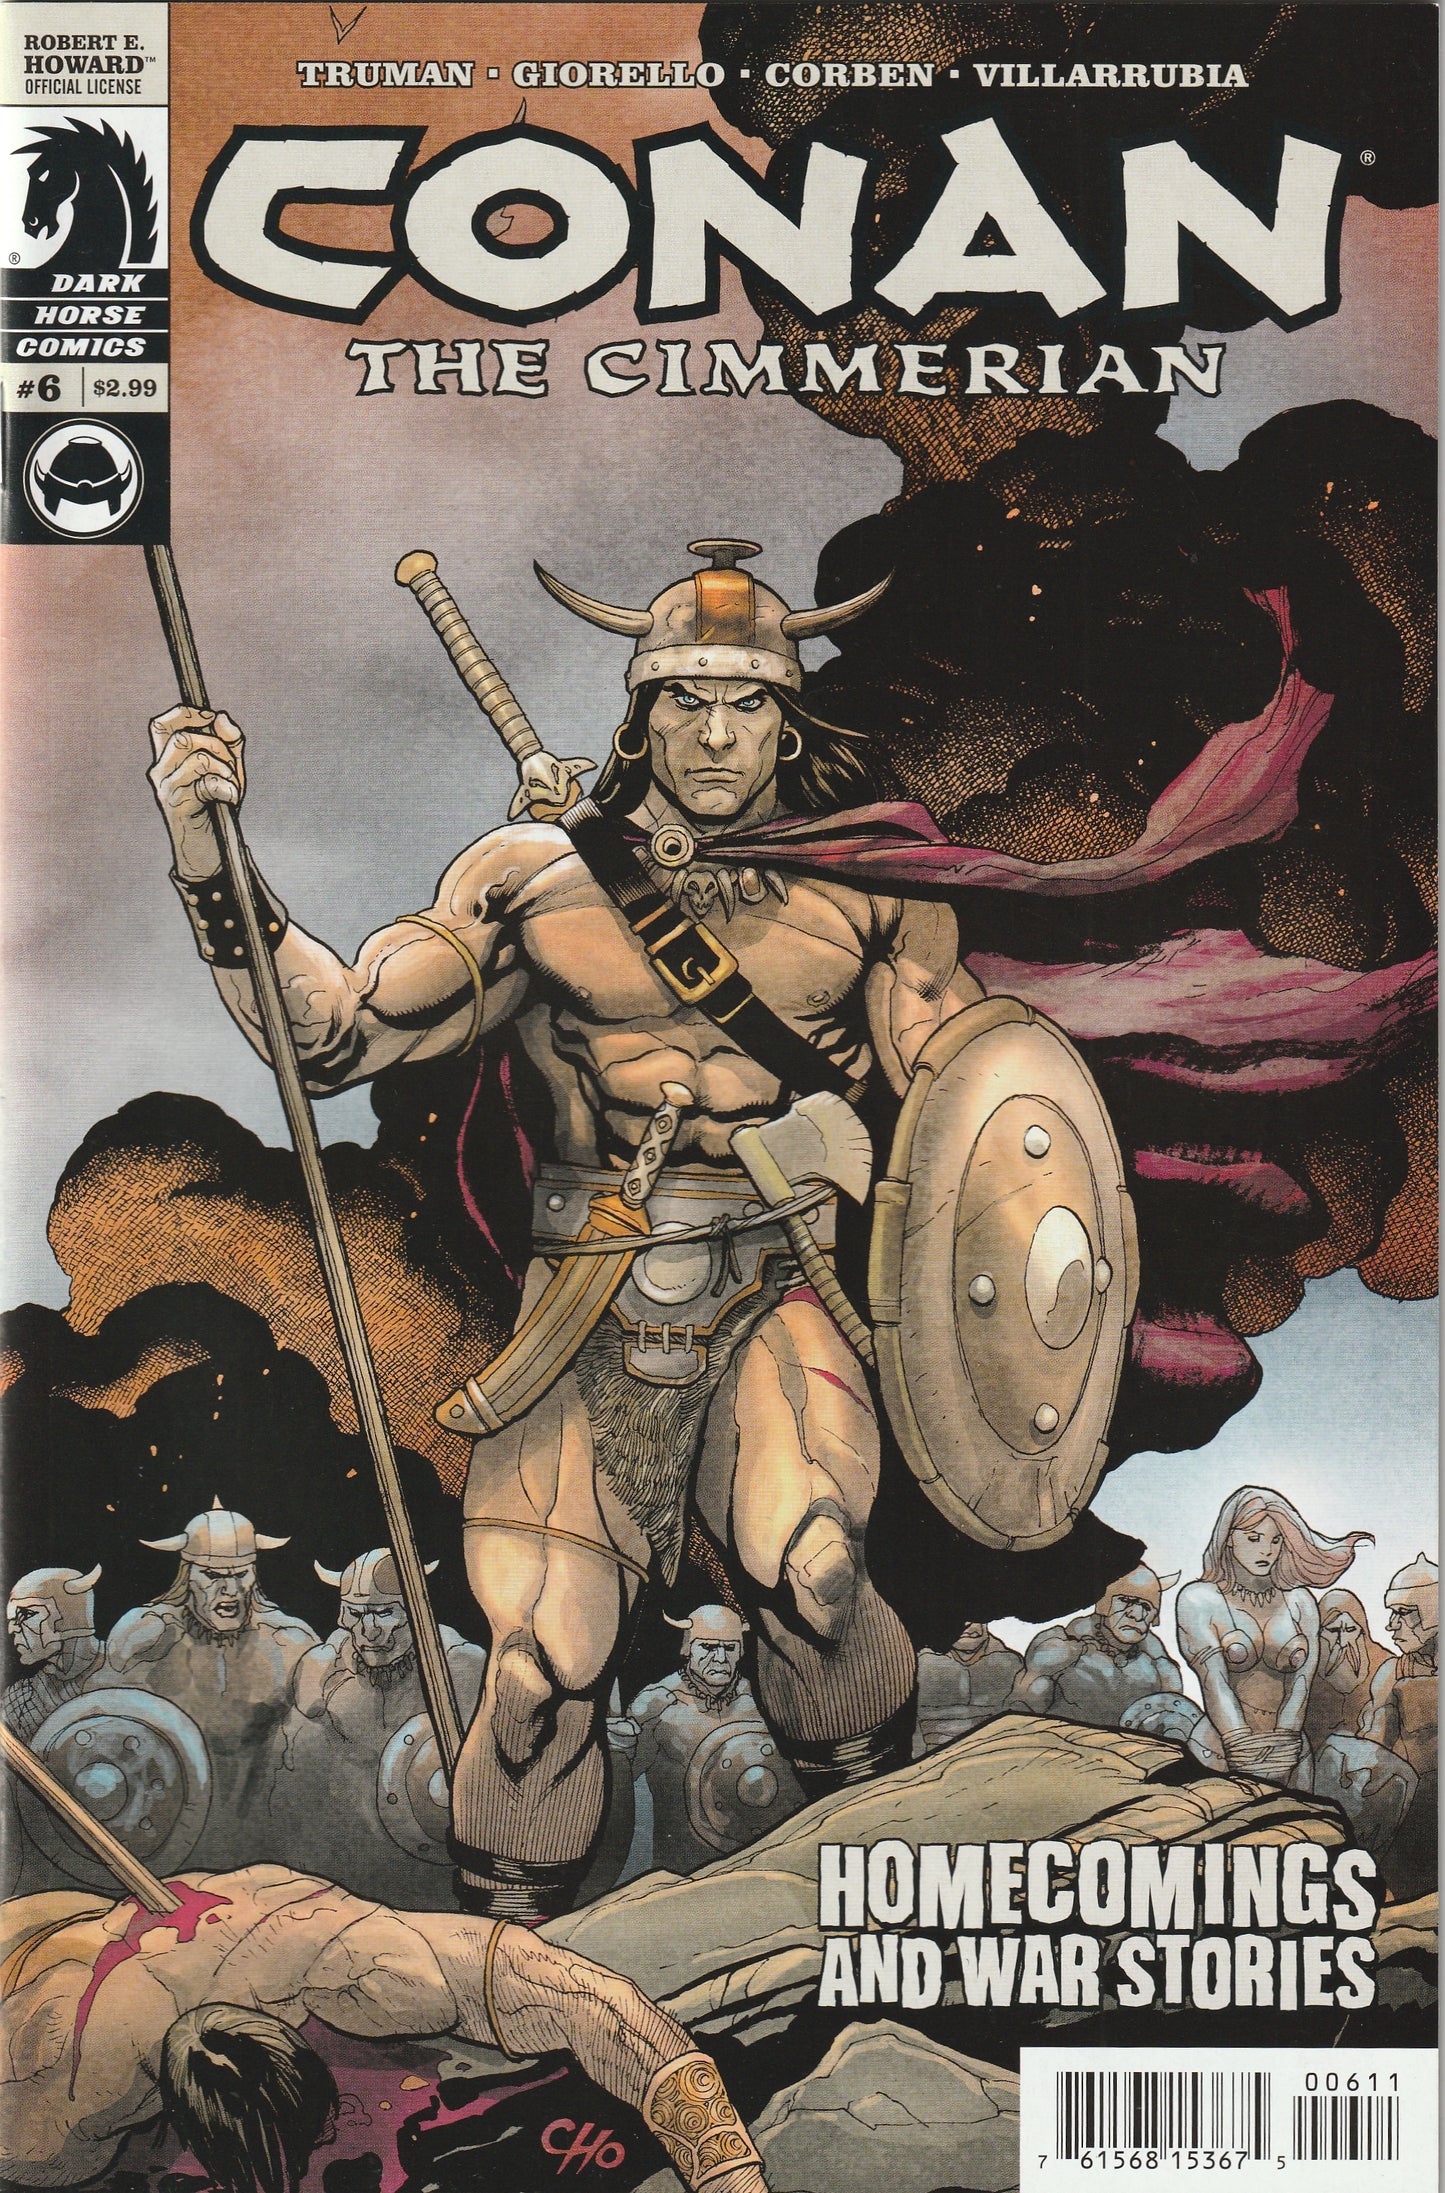 Conan The Cimmerian #6 (2008) - Frank Cho cover